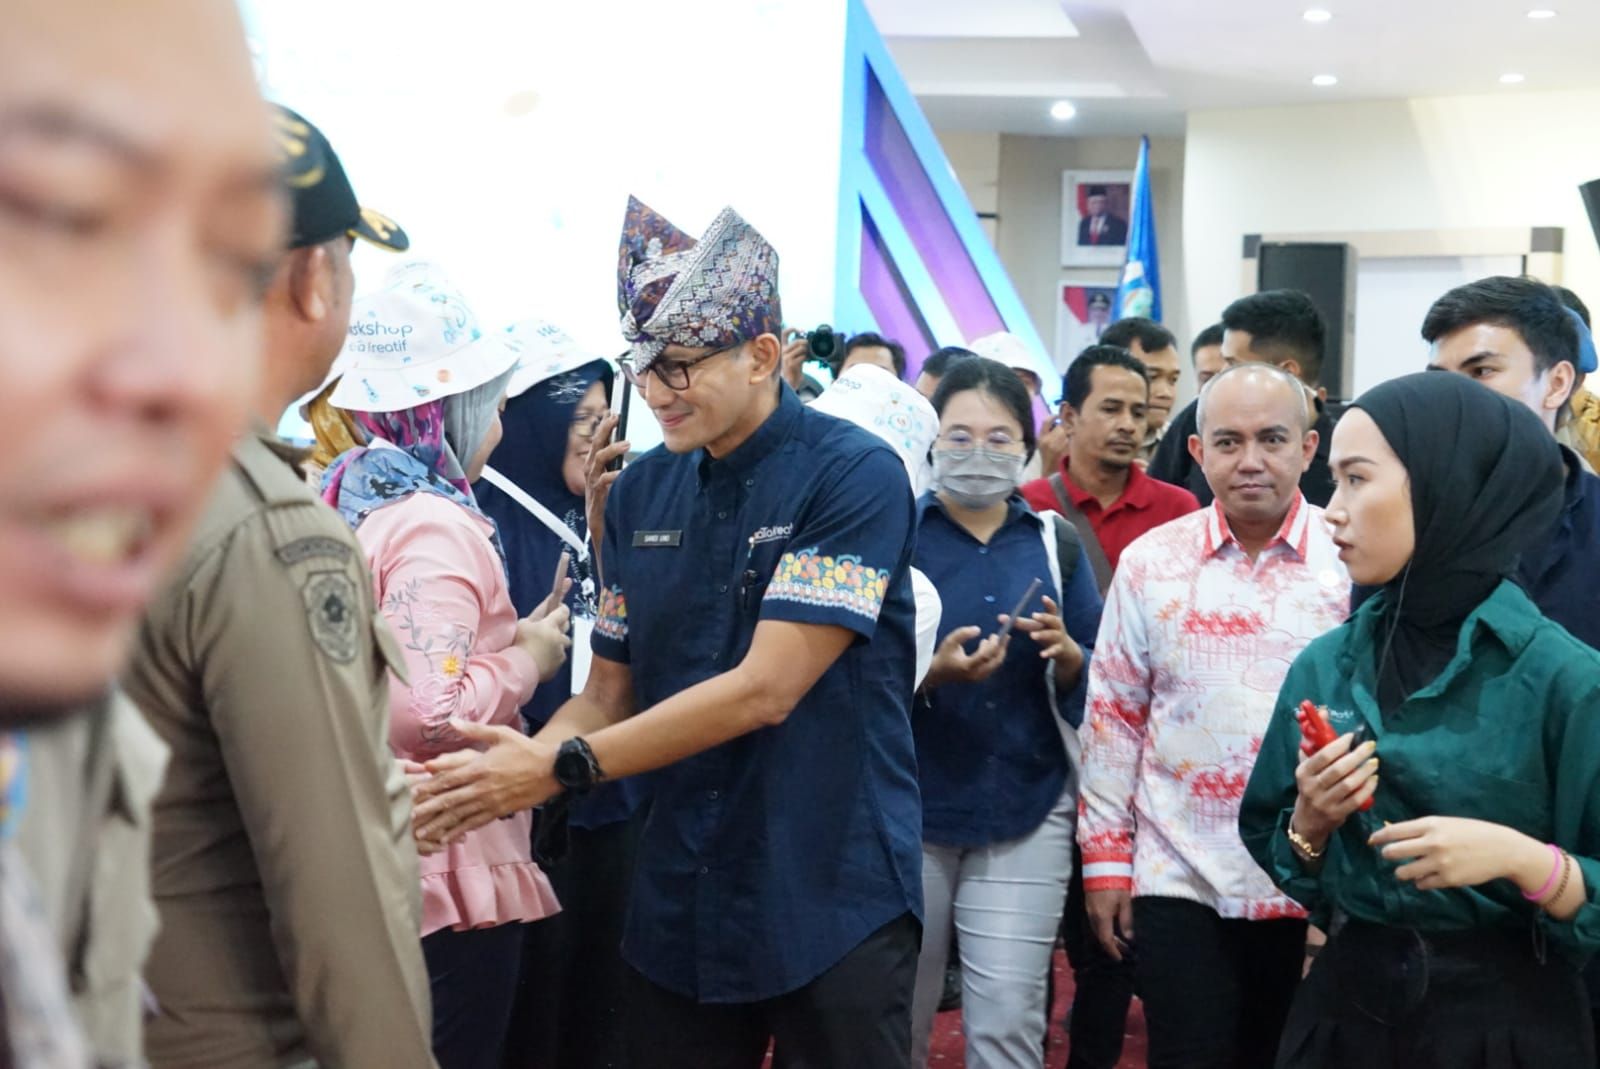 Menteri Pariwisata dan Ekonomi Kreatif (Menparekraf) Republik Indonesia, Sandiaga Salahuddin Uno sambangi Kota Beribu Senyuman.